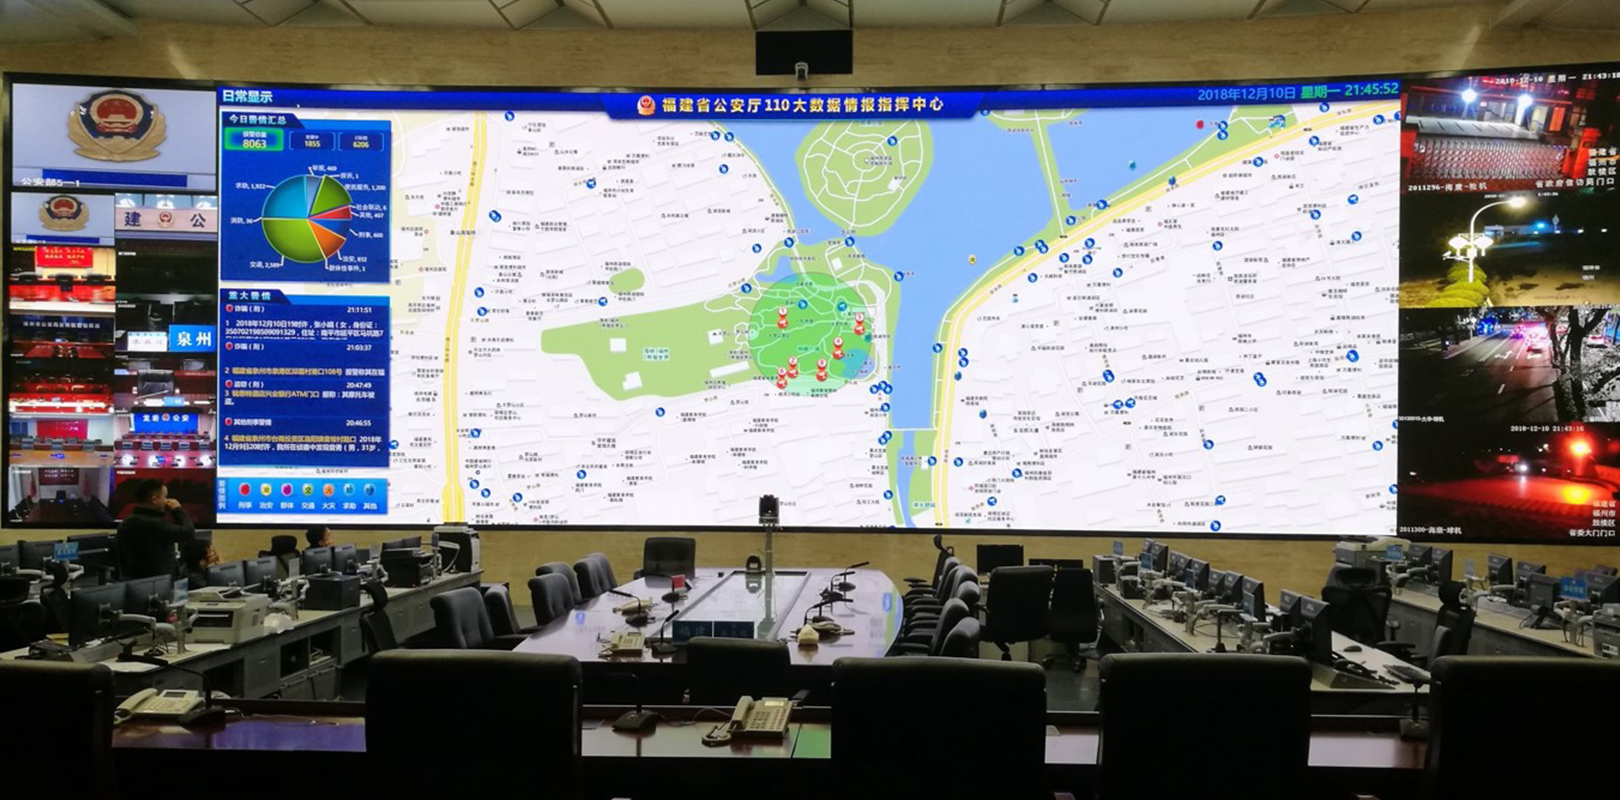 Big data command center of Fujian Public Security Department